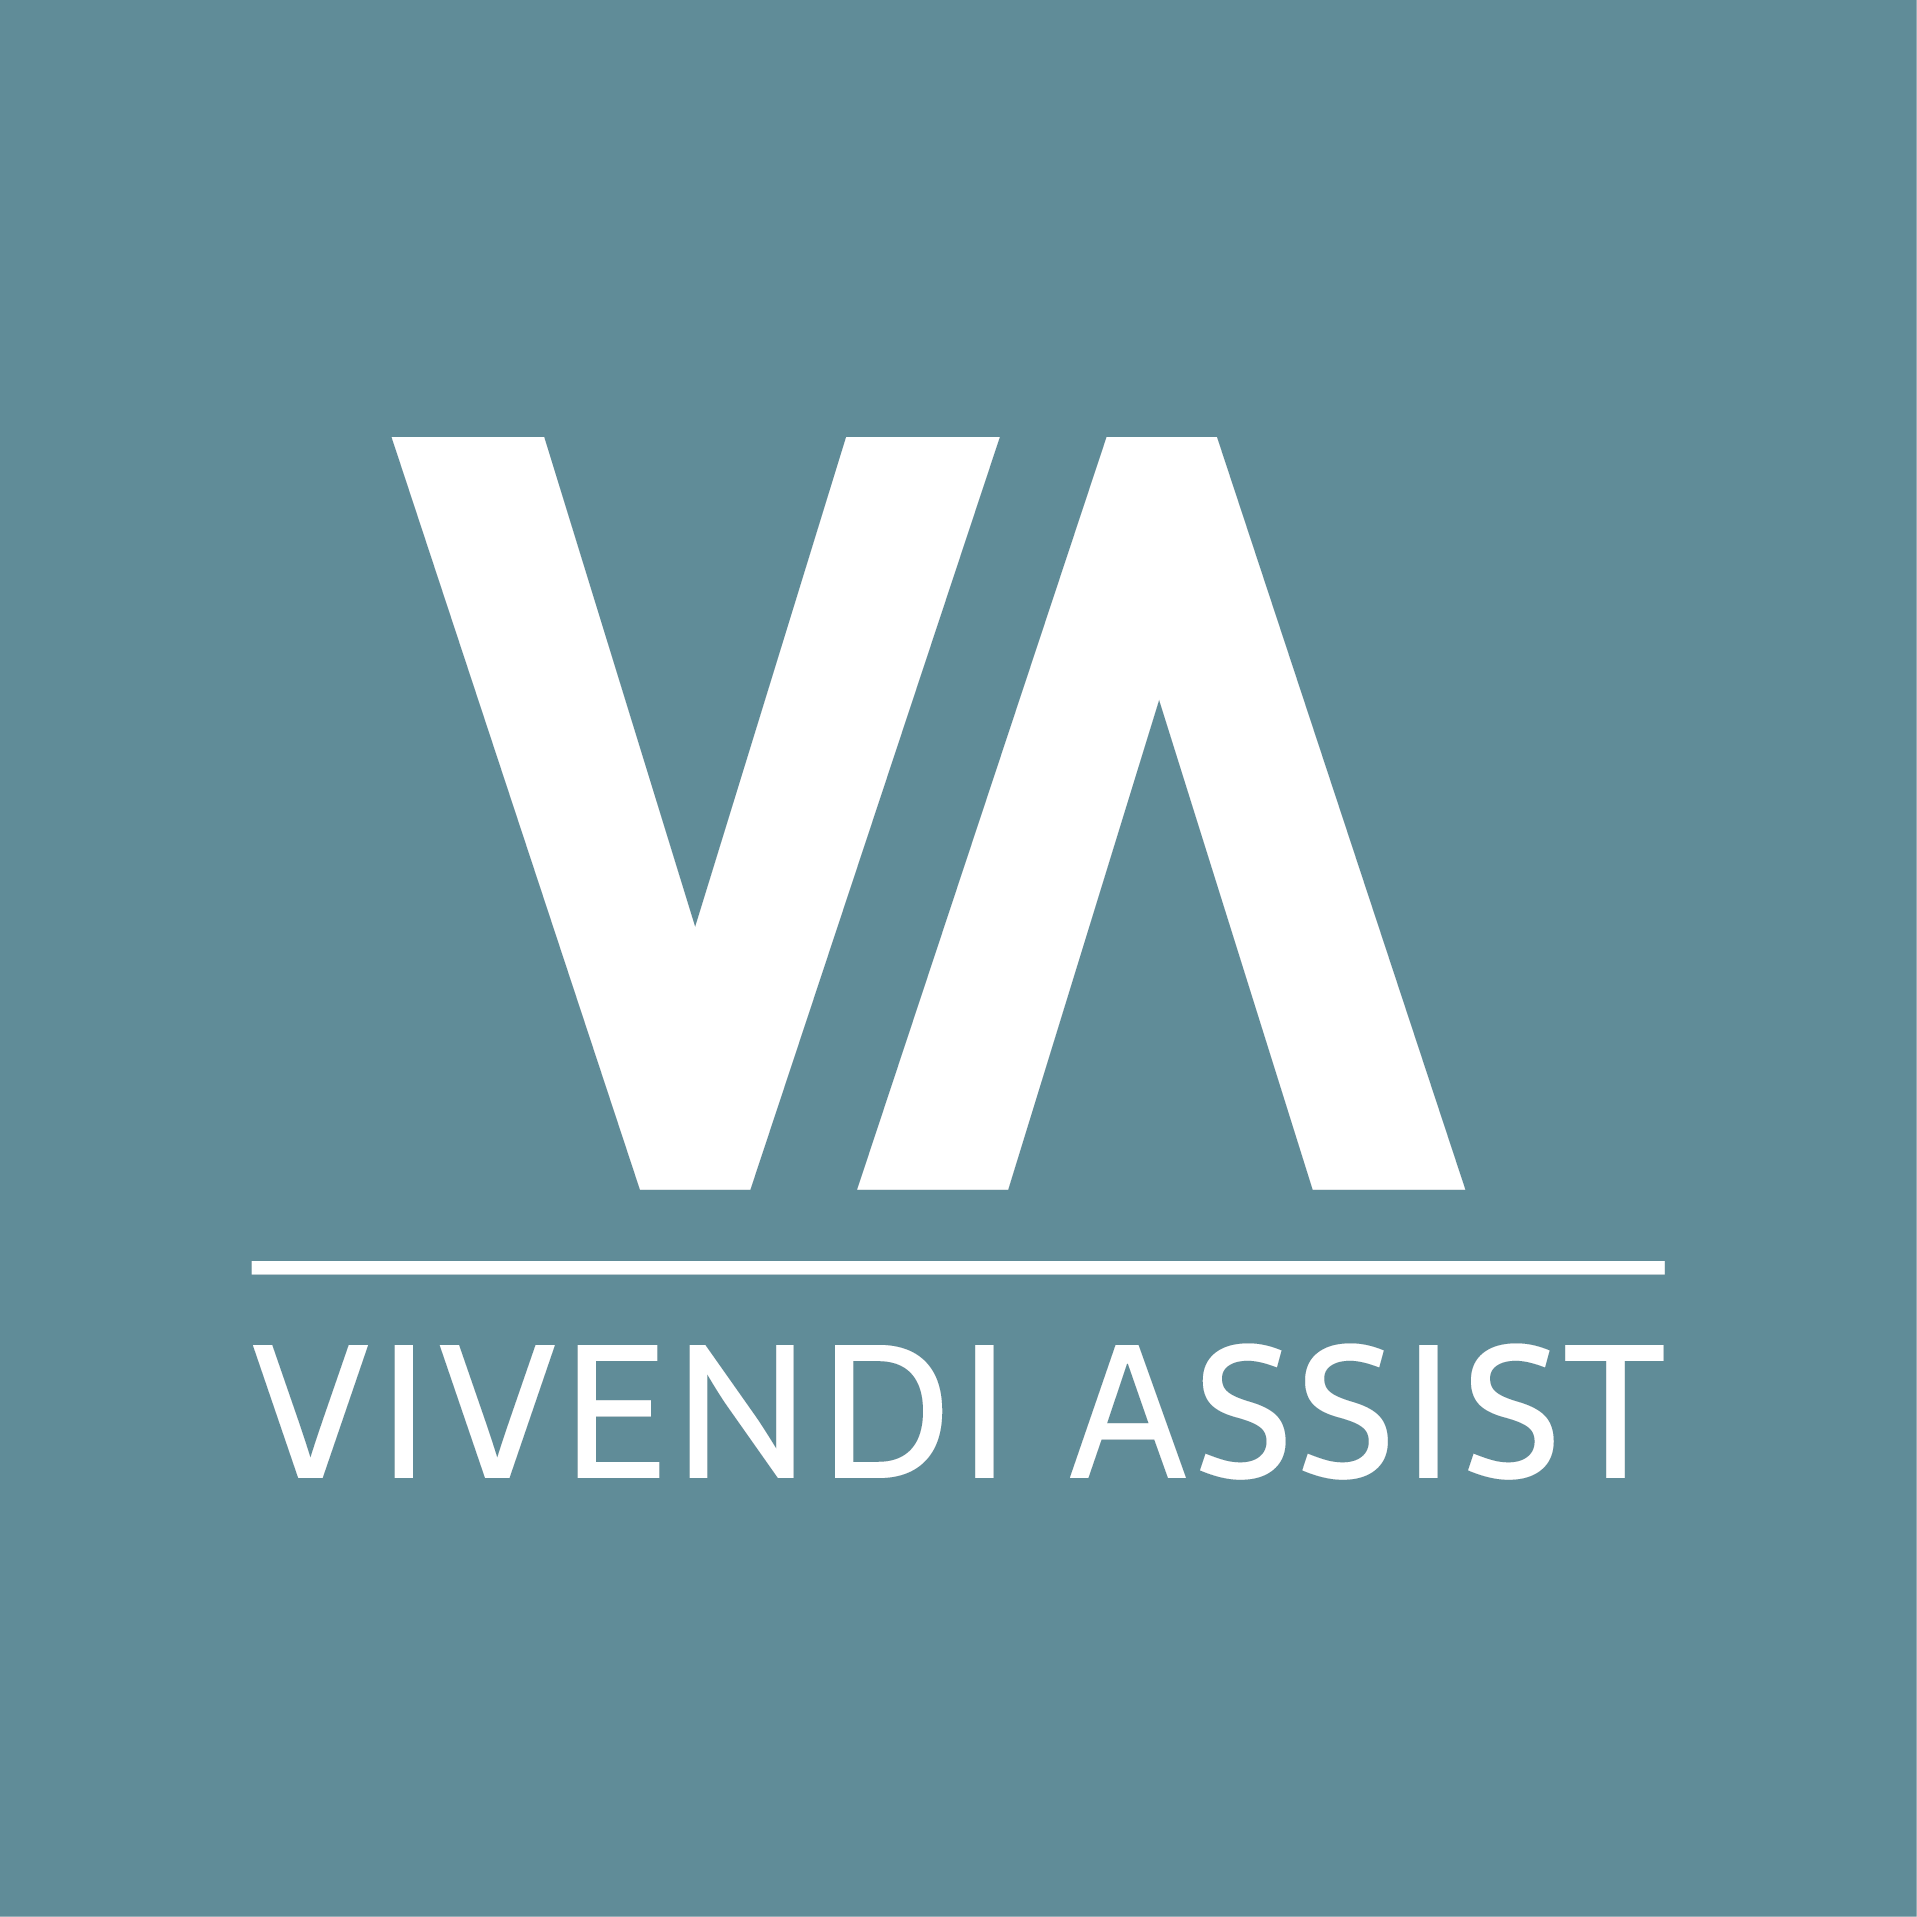 Vivendi Assist